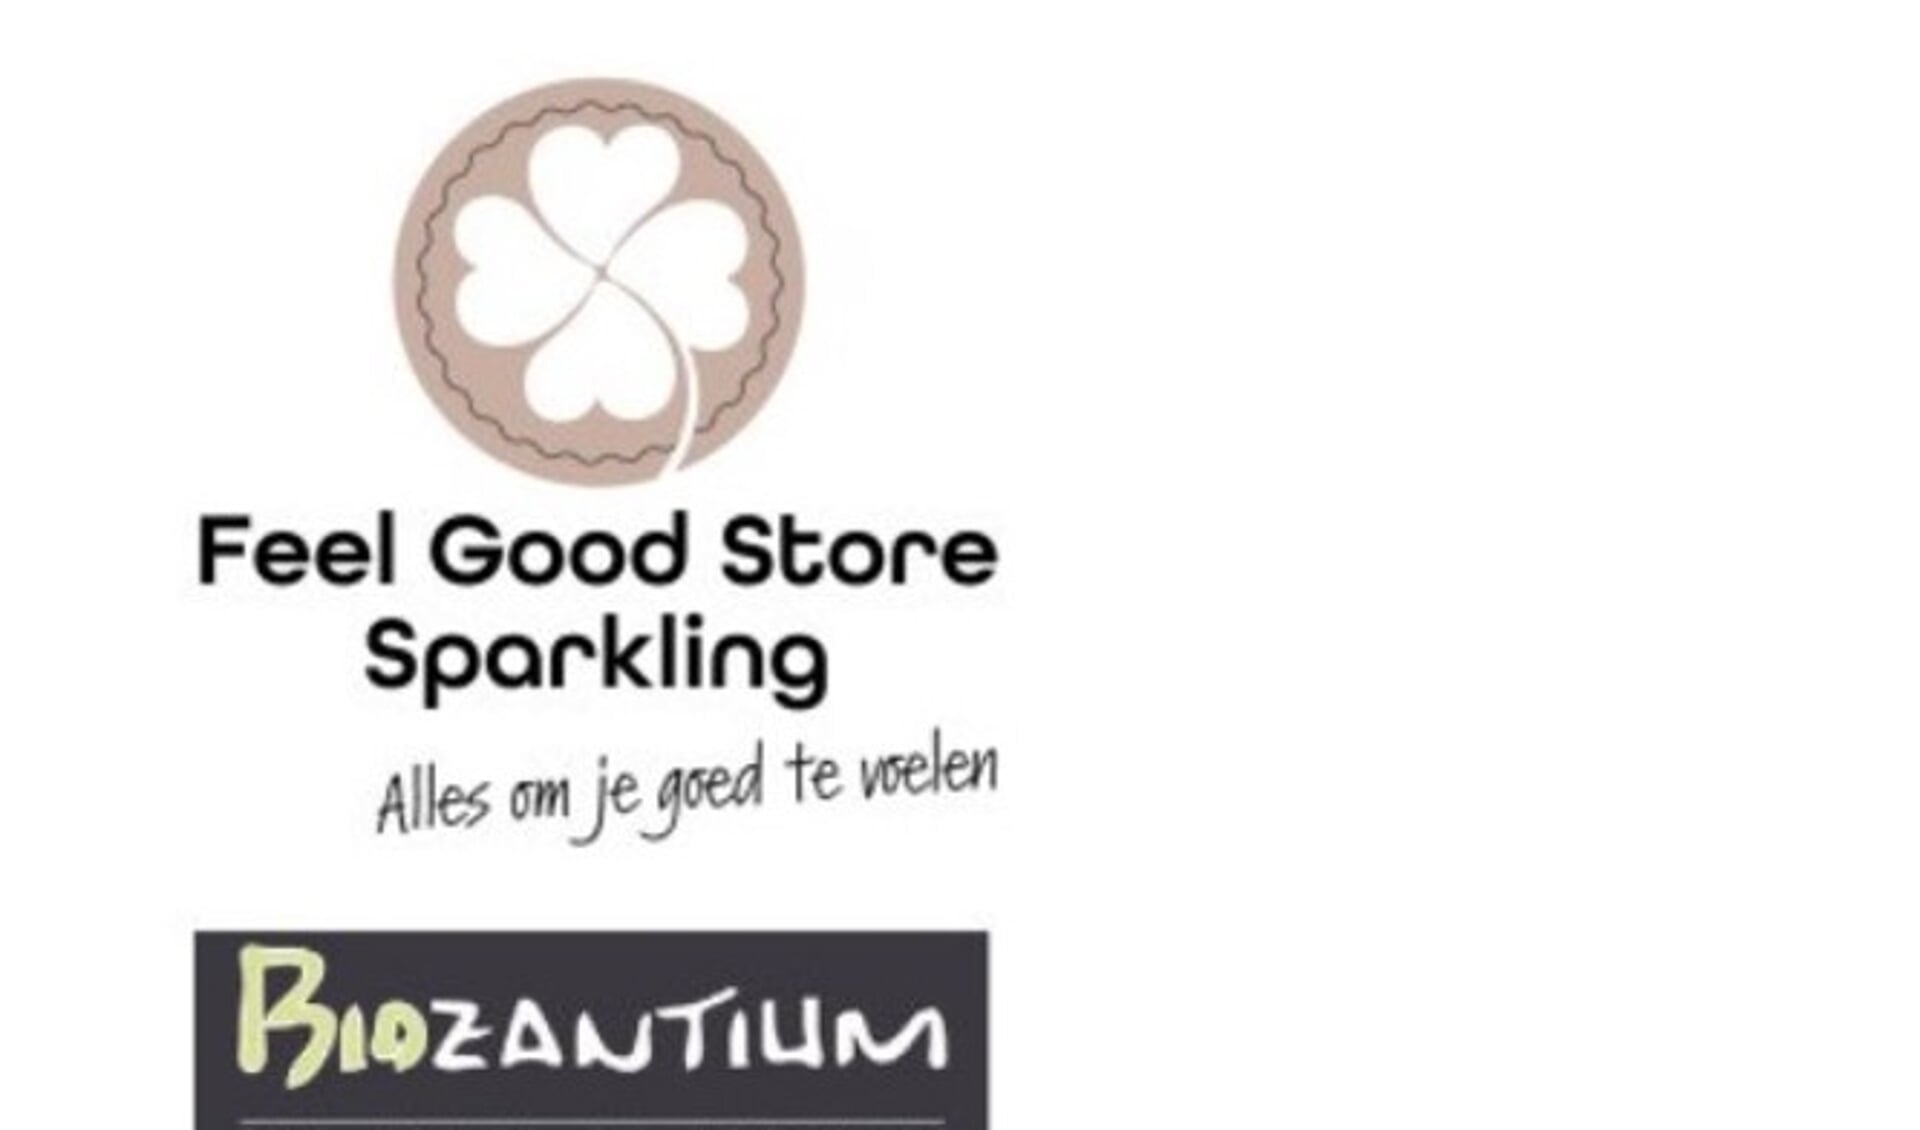 Feel Good Store Sparkling & Biozantium